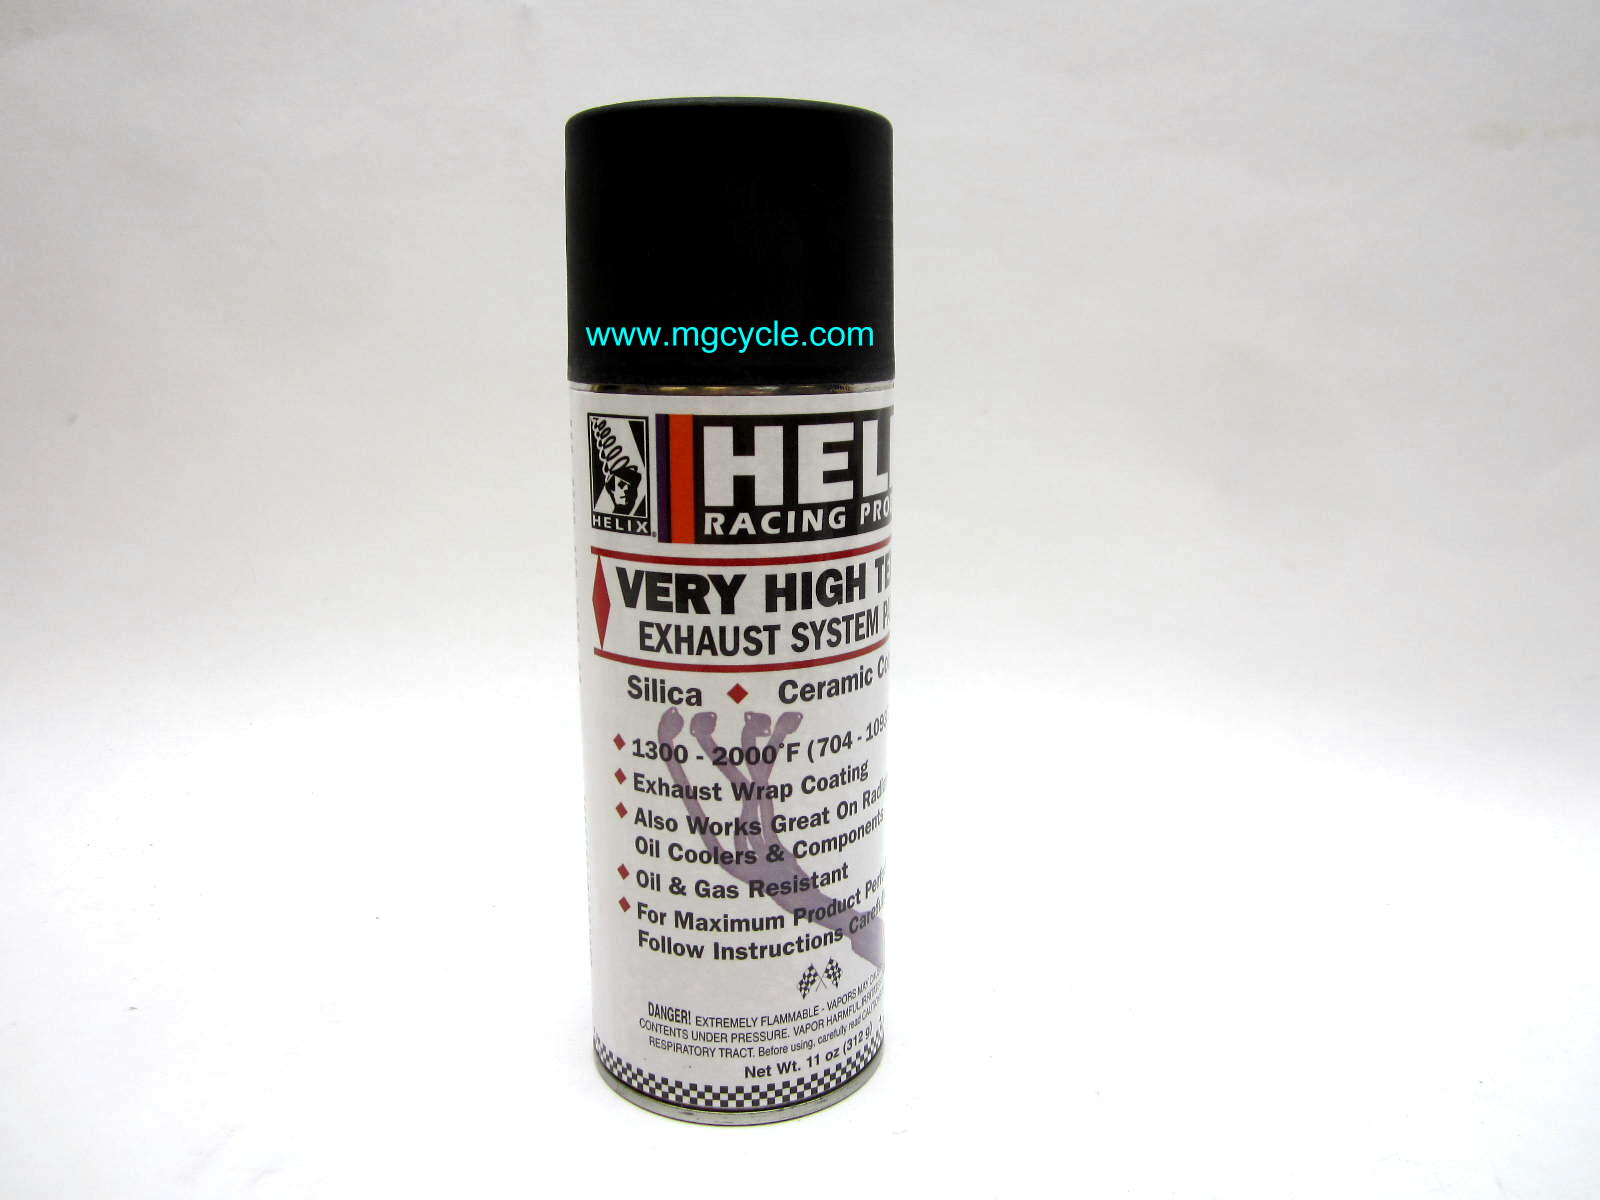 Helix Racing Products Hi Temp Header Paint, flat black 11oz - Click Image to Close